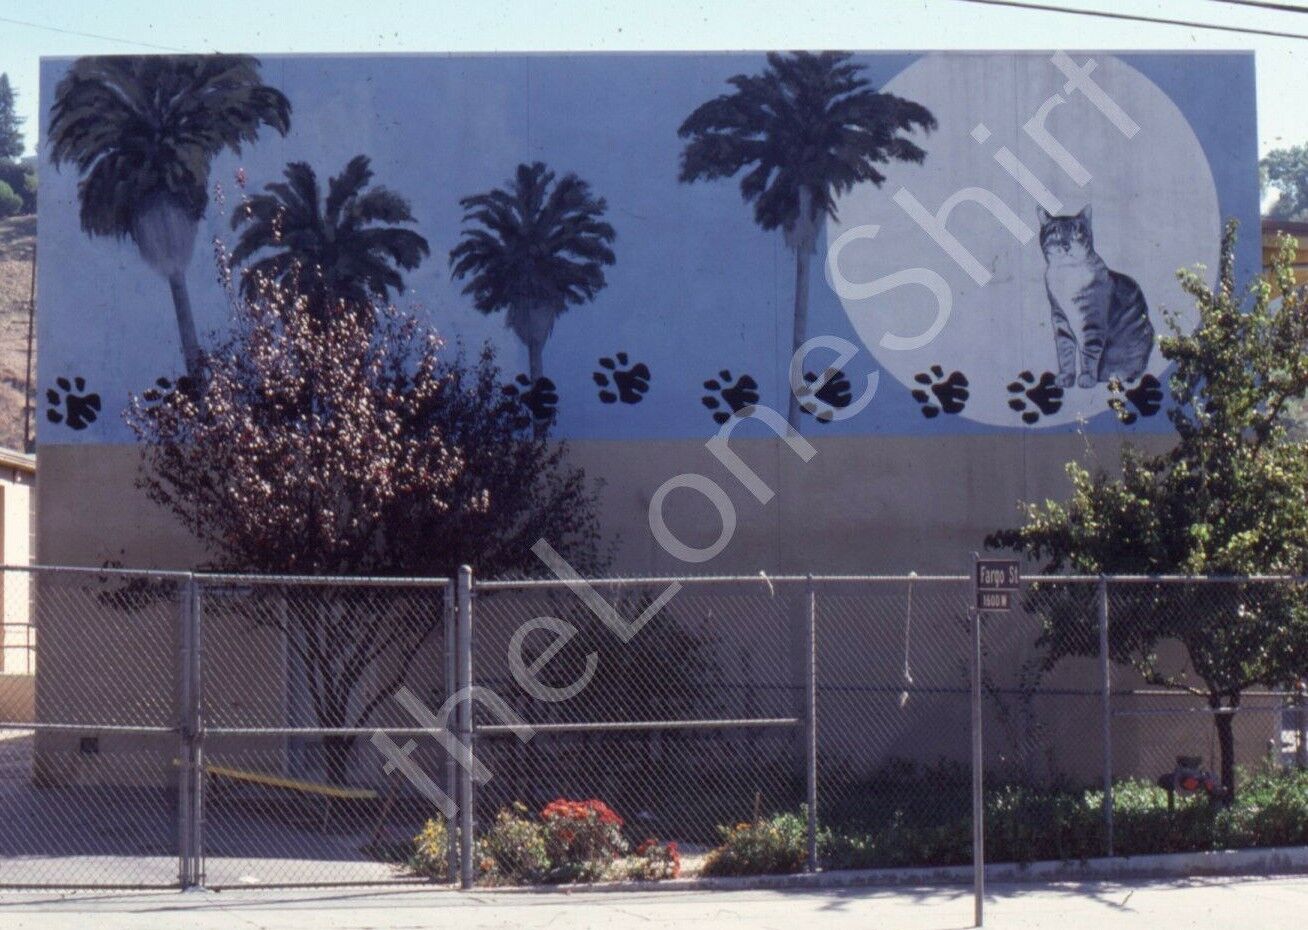 1979 Los Angeles 1600 W Fargo St Cat Moon Art Mural California 35mm Film Slide